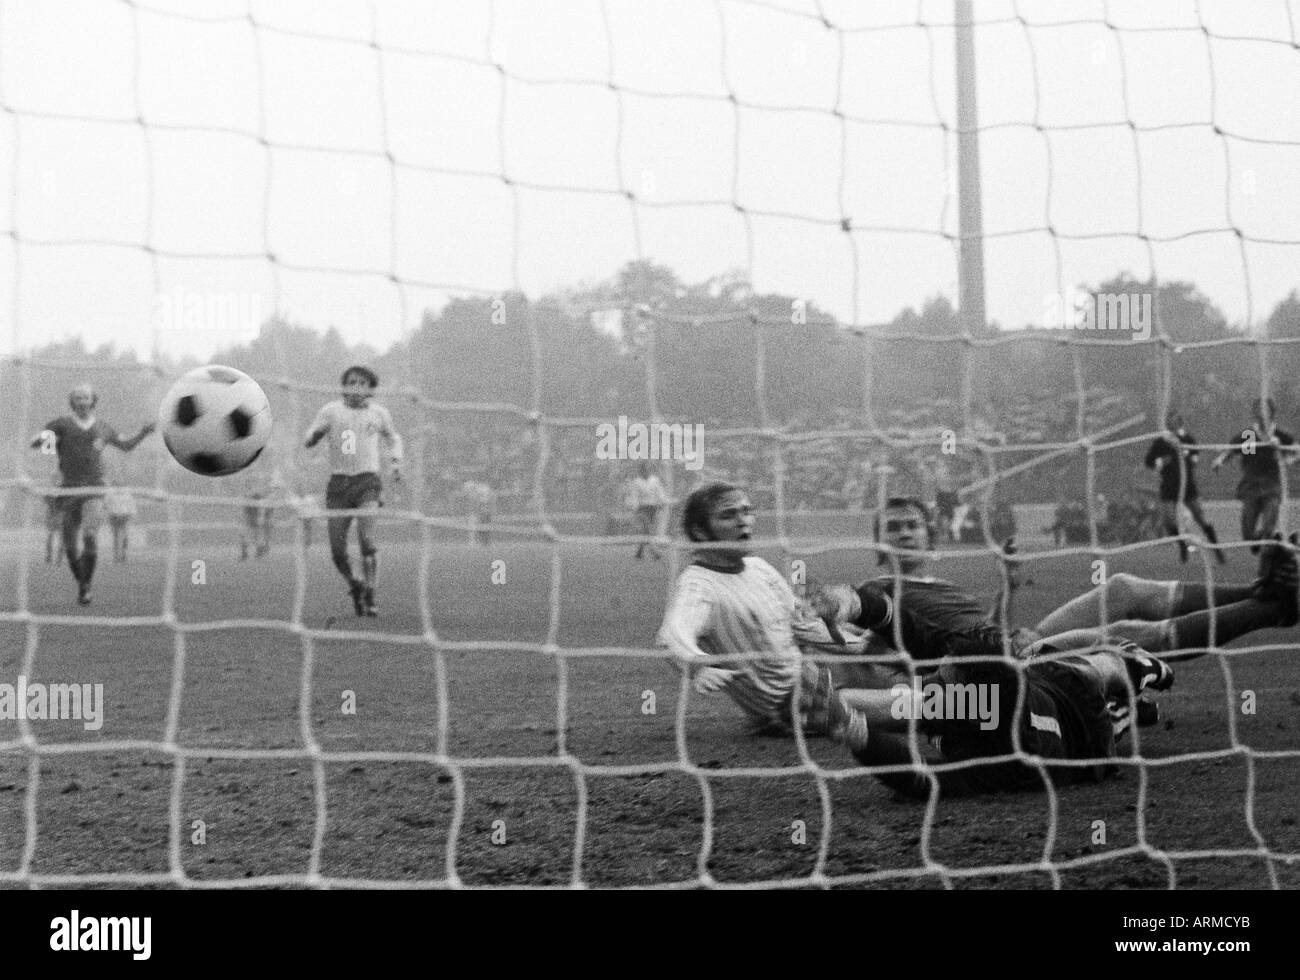 Calcio, Regionalliga Ovest, 1973/1974, Niederrhein Stadium di Oberhausen, Rot-Weiss Oberhausen versus Sportfreunde Siegen 3:1, scena del match, 2:0 obiettivo di Oberhausen, precedendo arenarsi f.l.t.r. Gerhard Mueller (Siegen), Lothar Kobluhn (RWO), il custode Detle Foto Stock